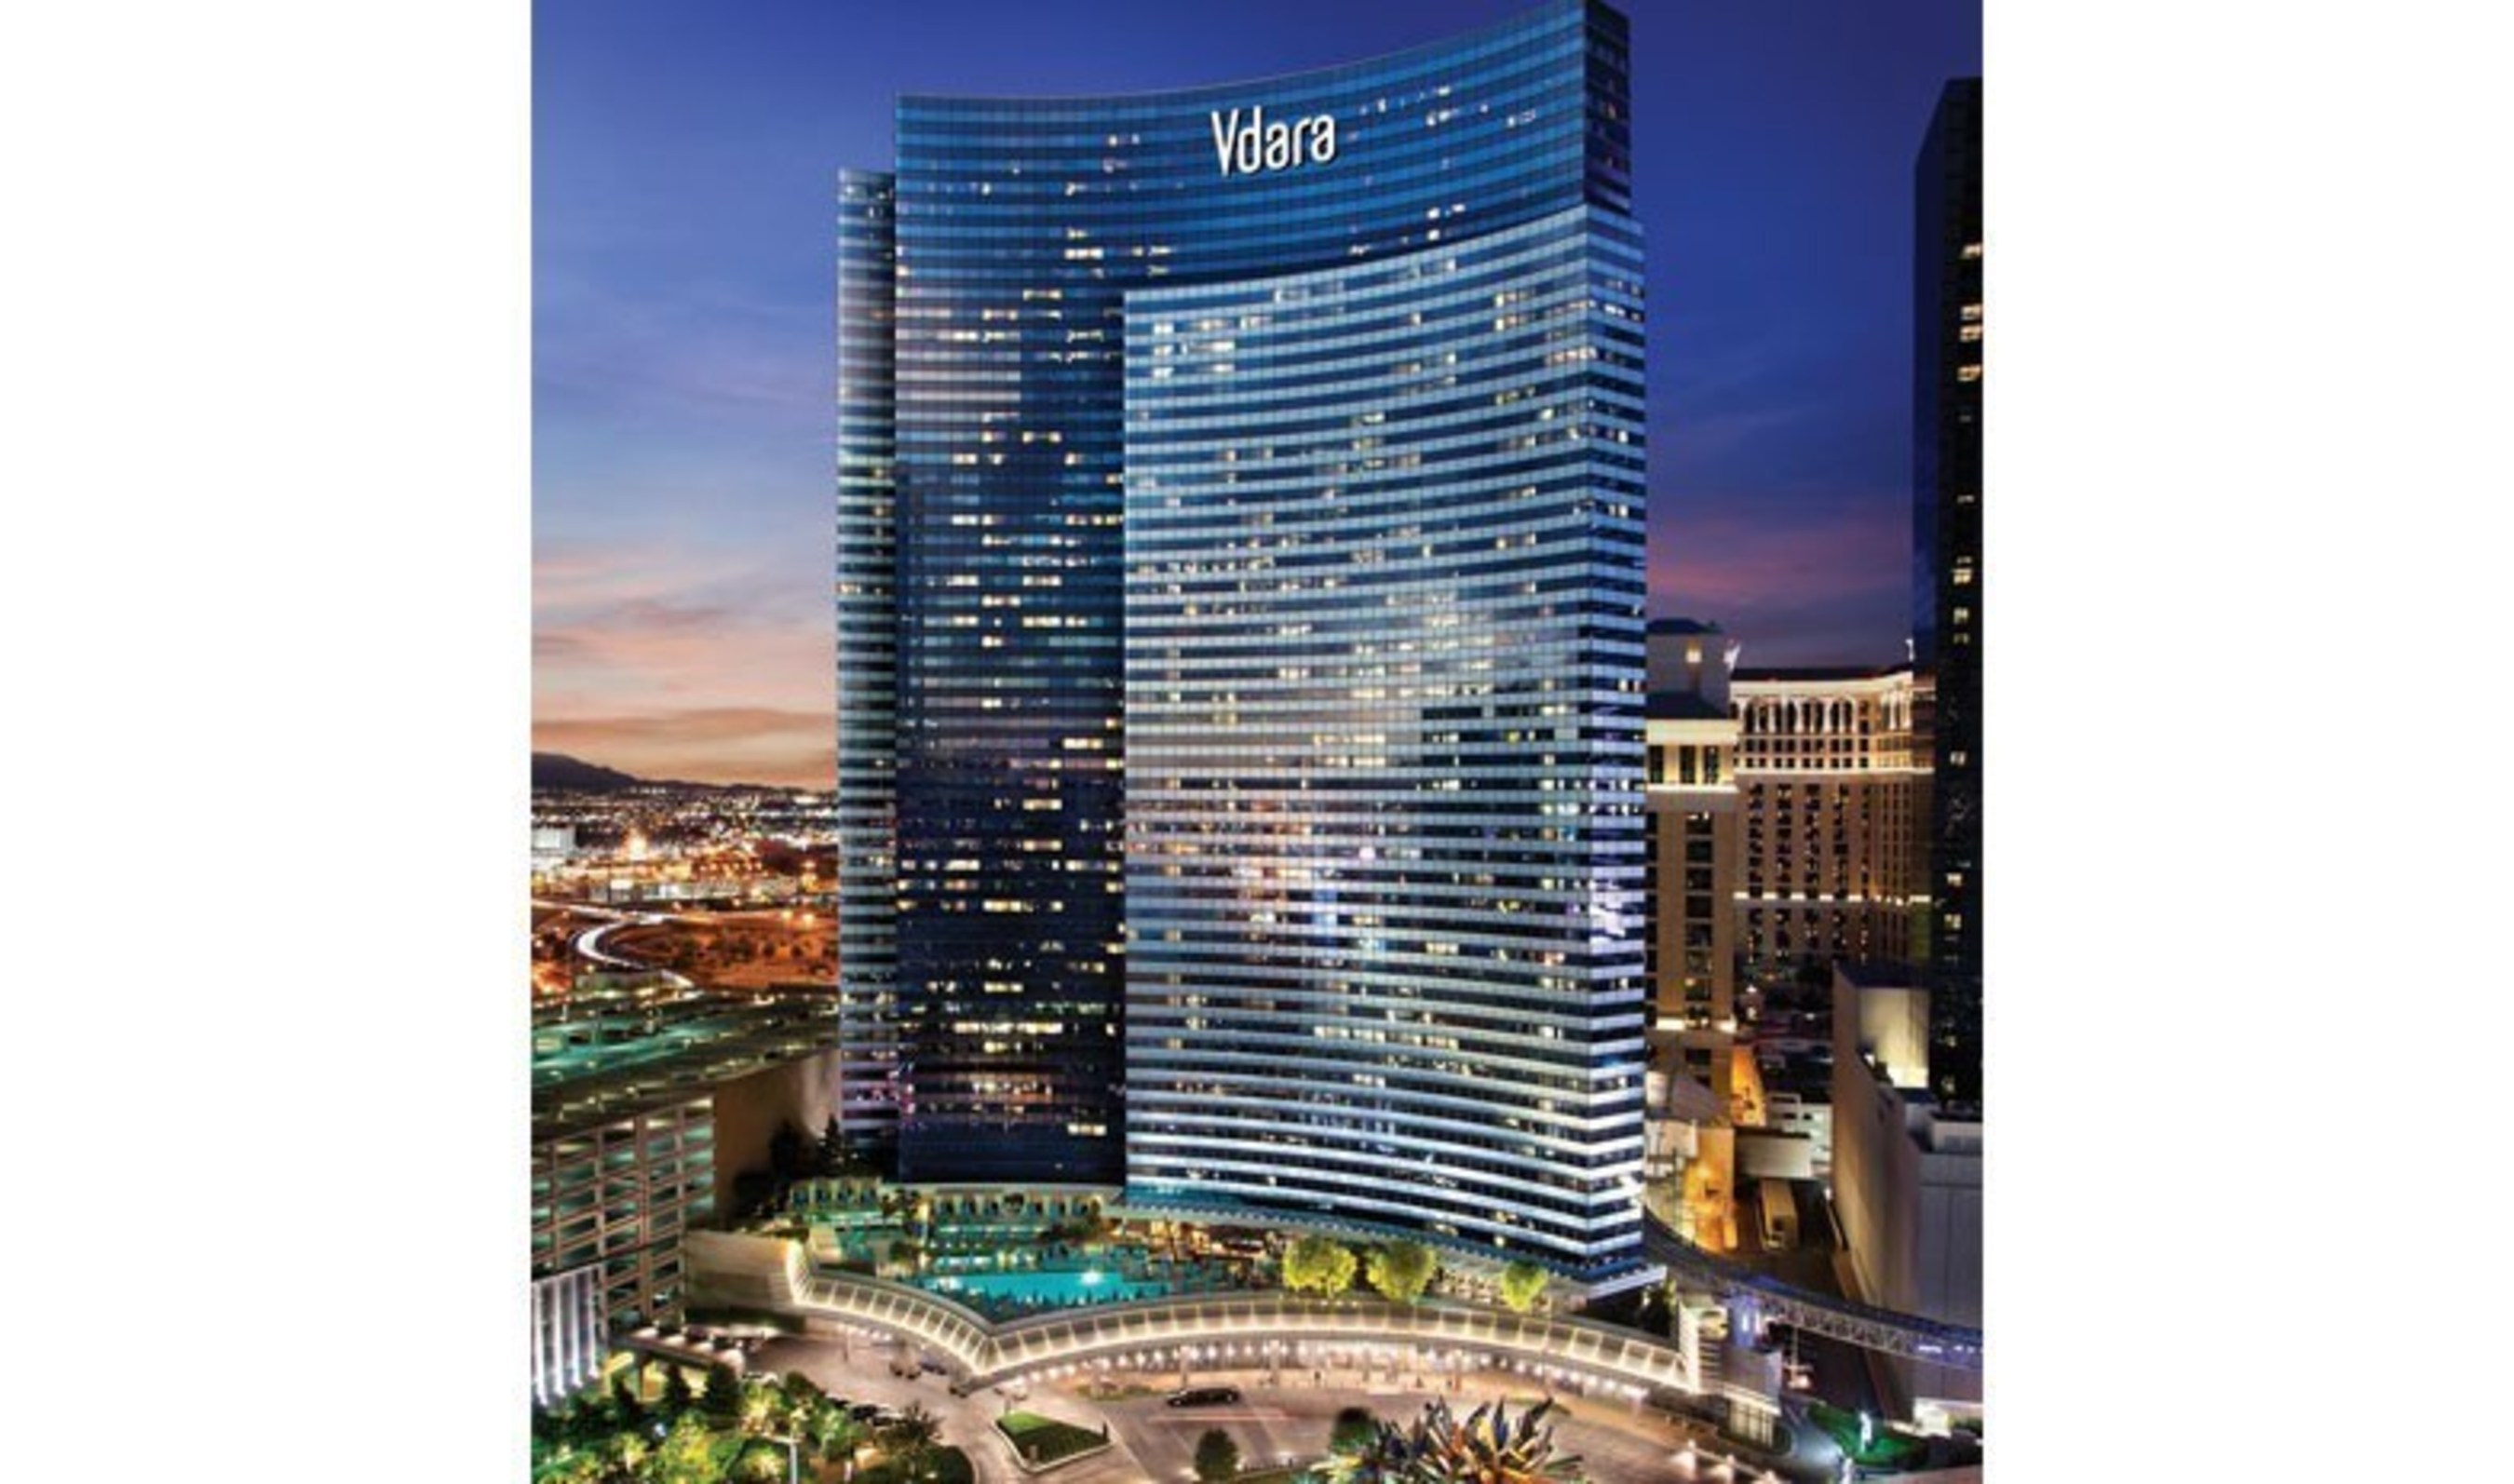 Vdara Hotel & Conference Center, Las Vegas